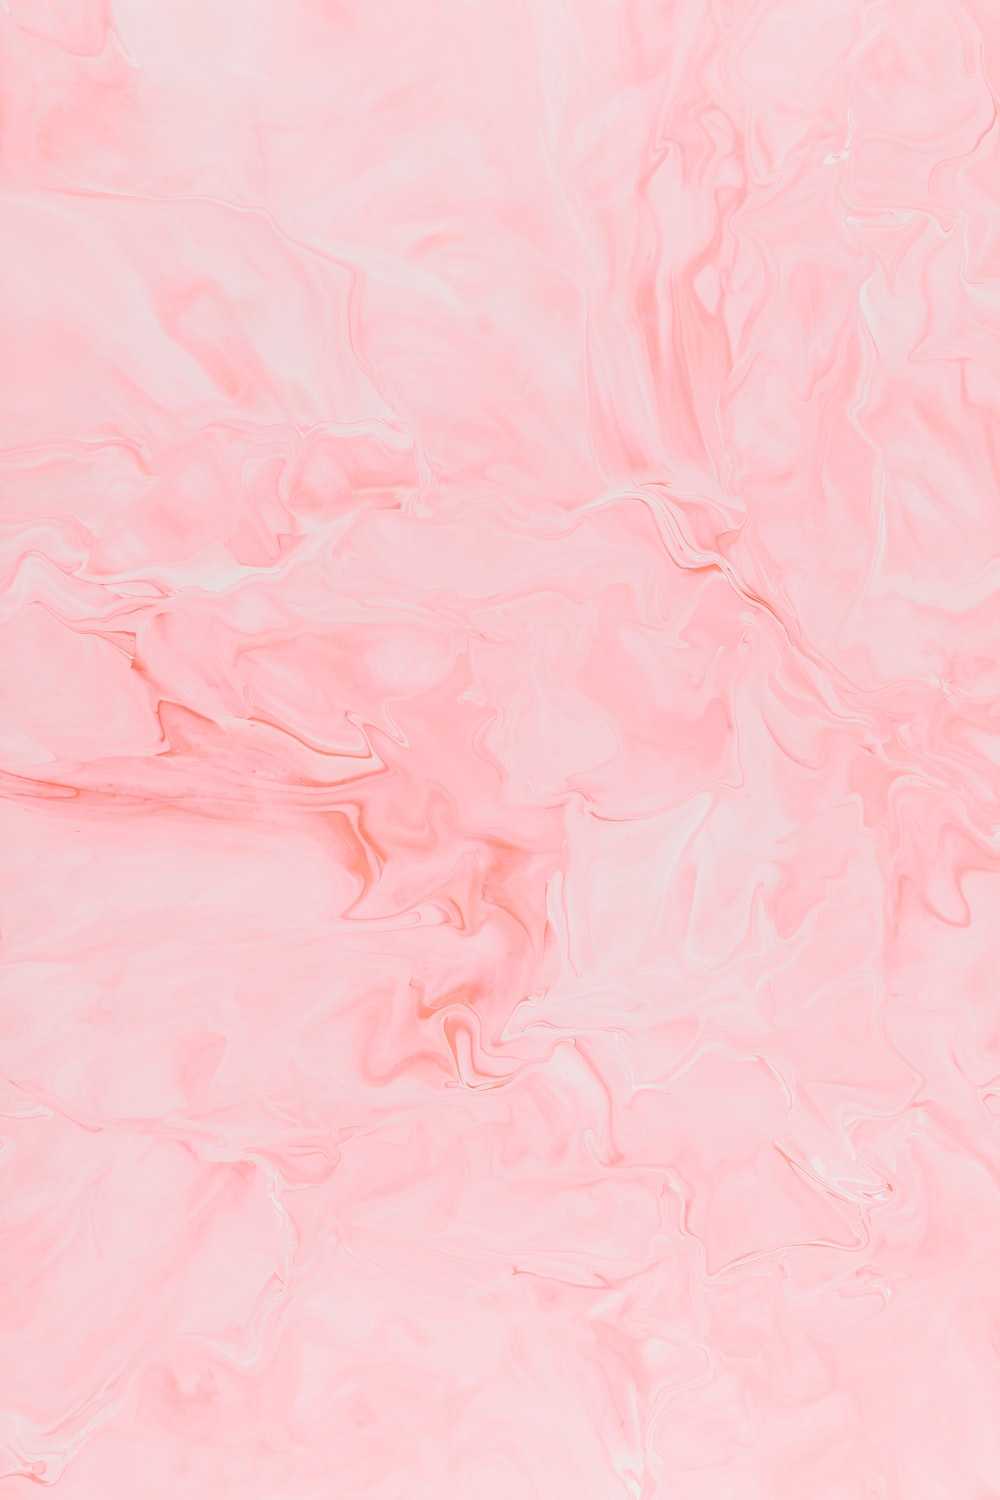 4K Pink Wallpaper 1